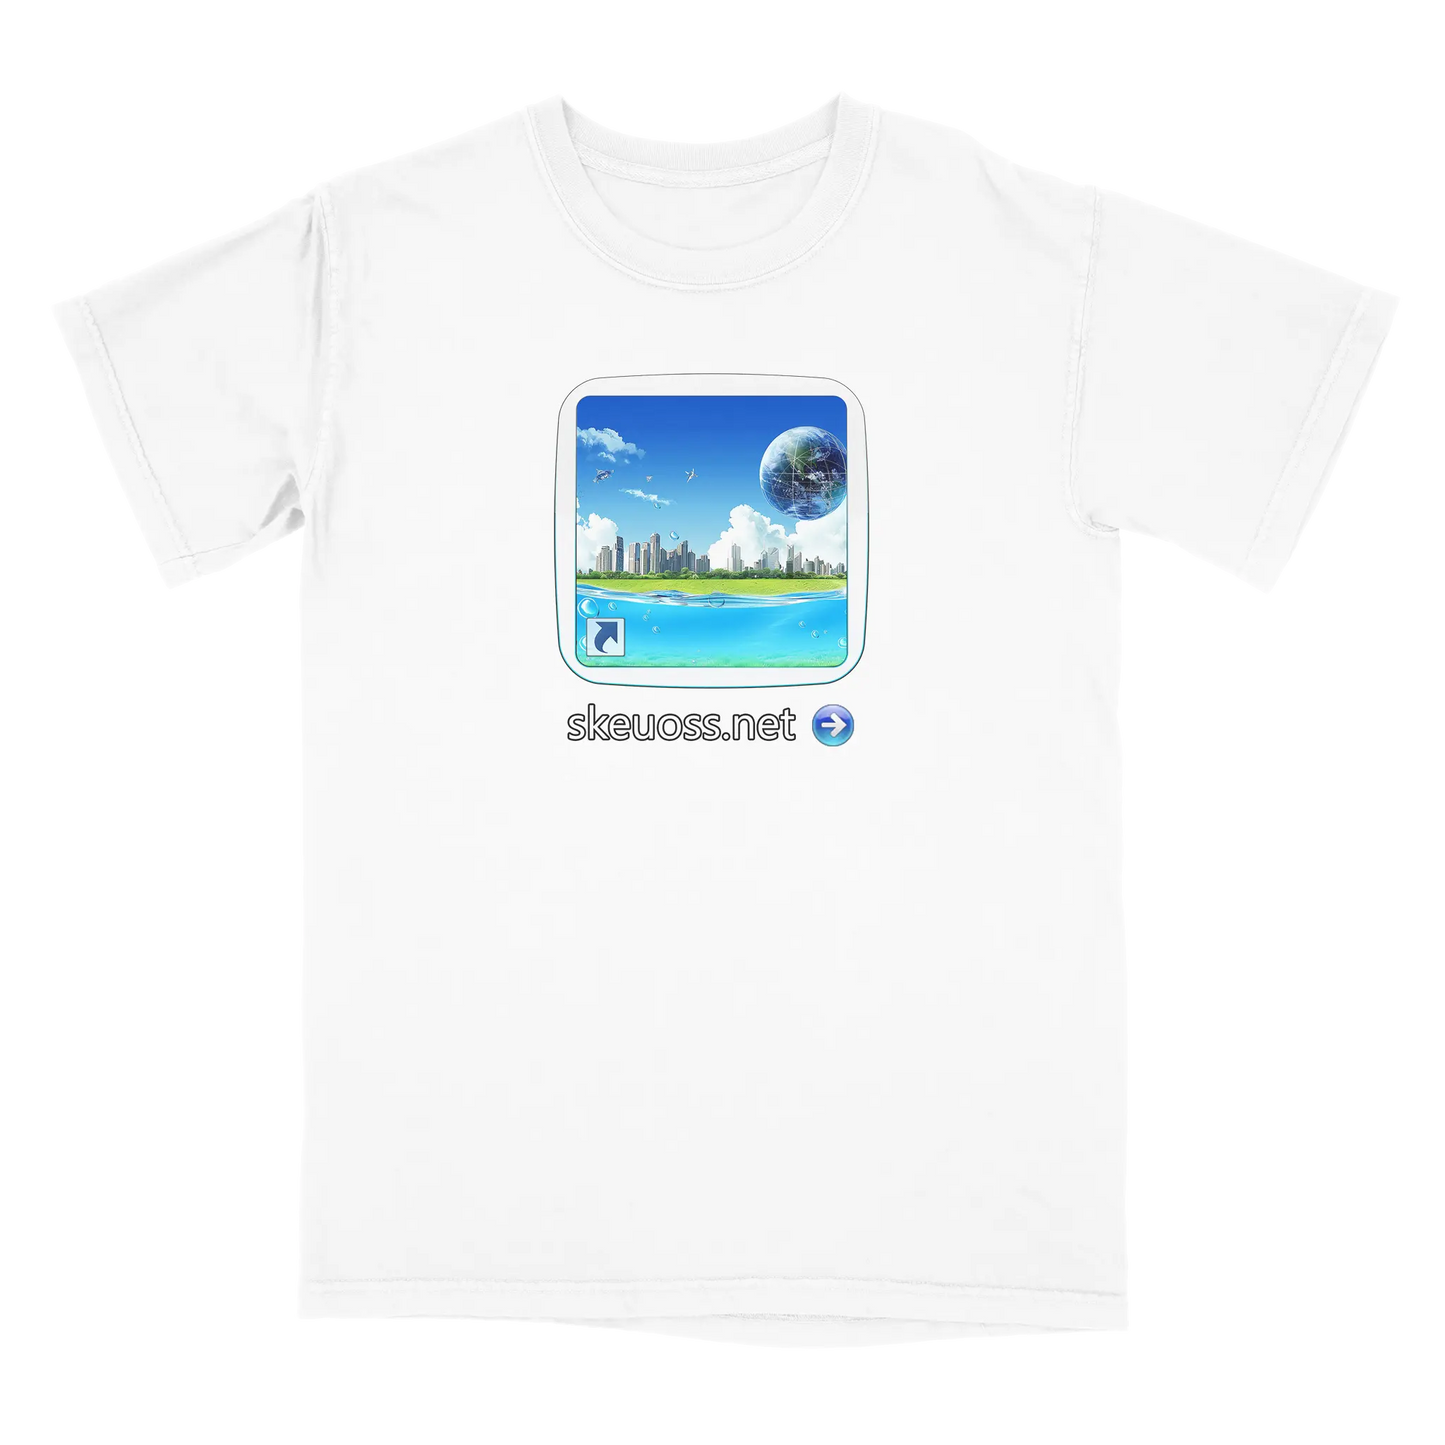 Frutiger Aero T-shirt - User Login Collection - User 349